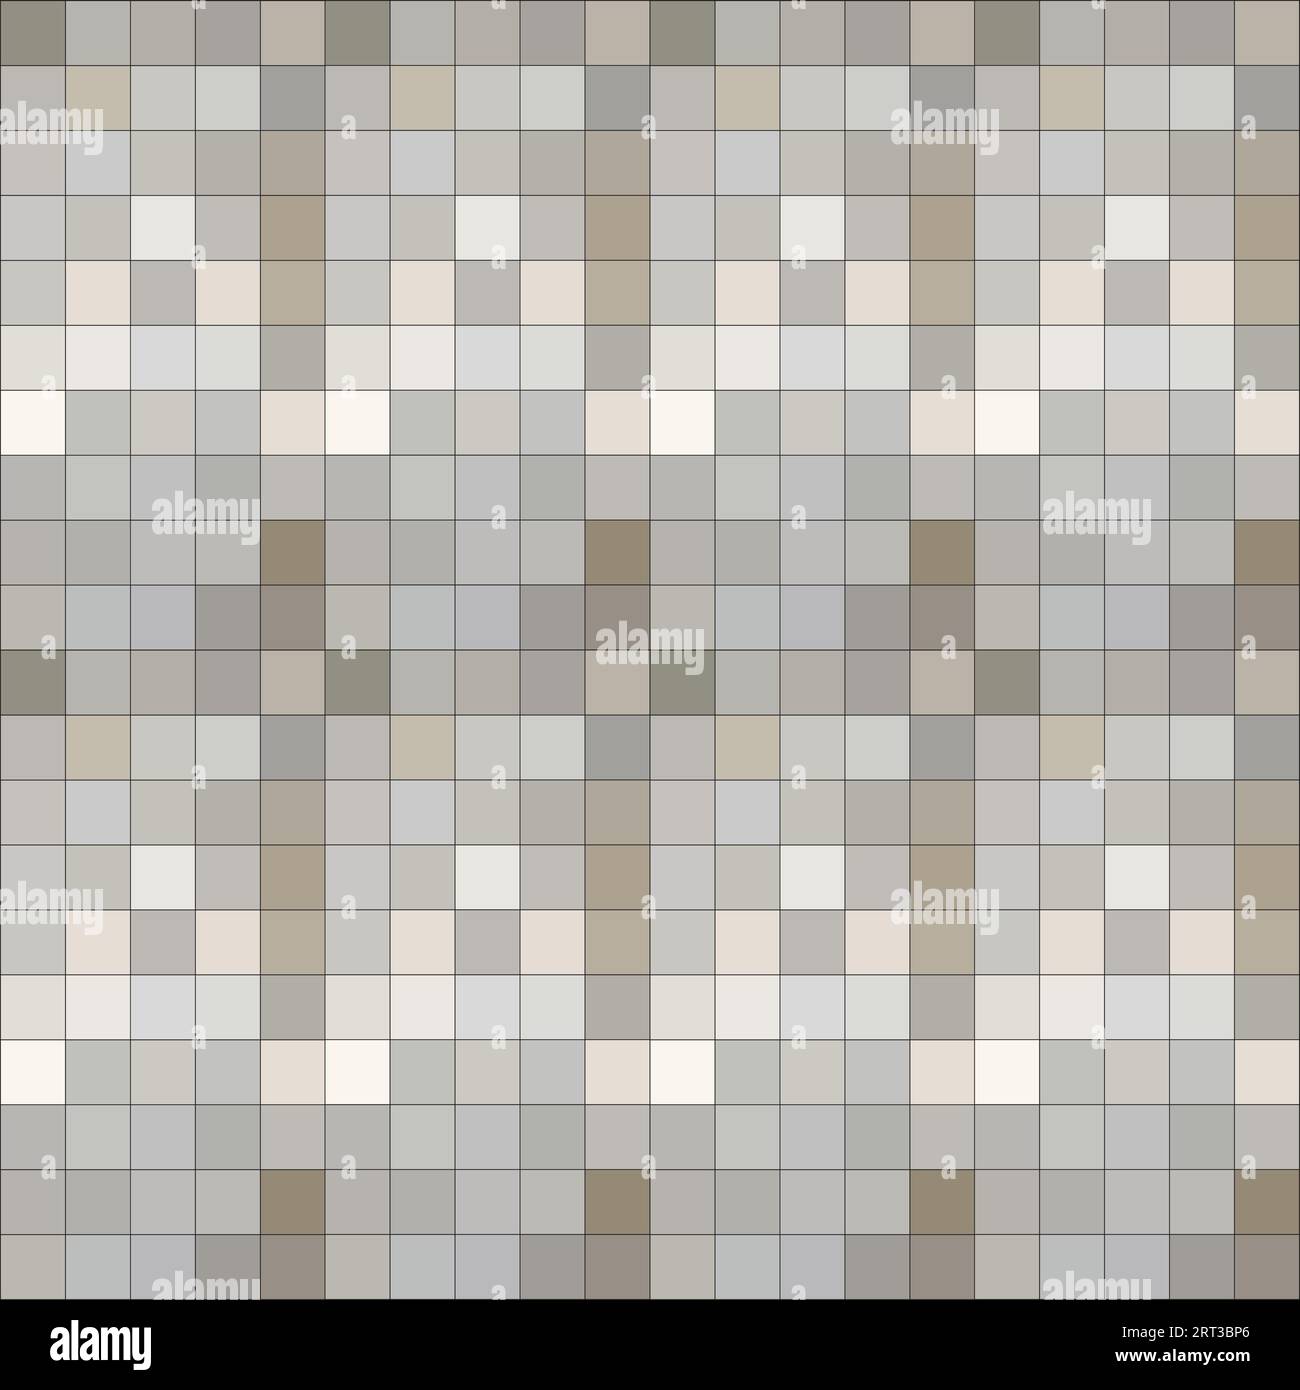 colorful, decorative tile pattern patchwork design. vector illustration Stock Vector